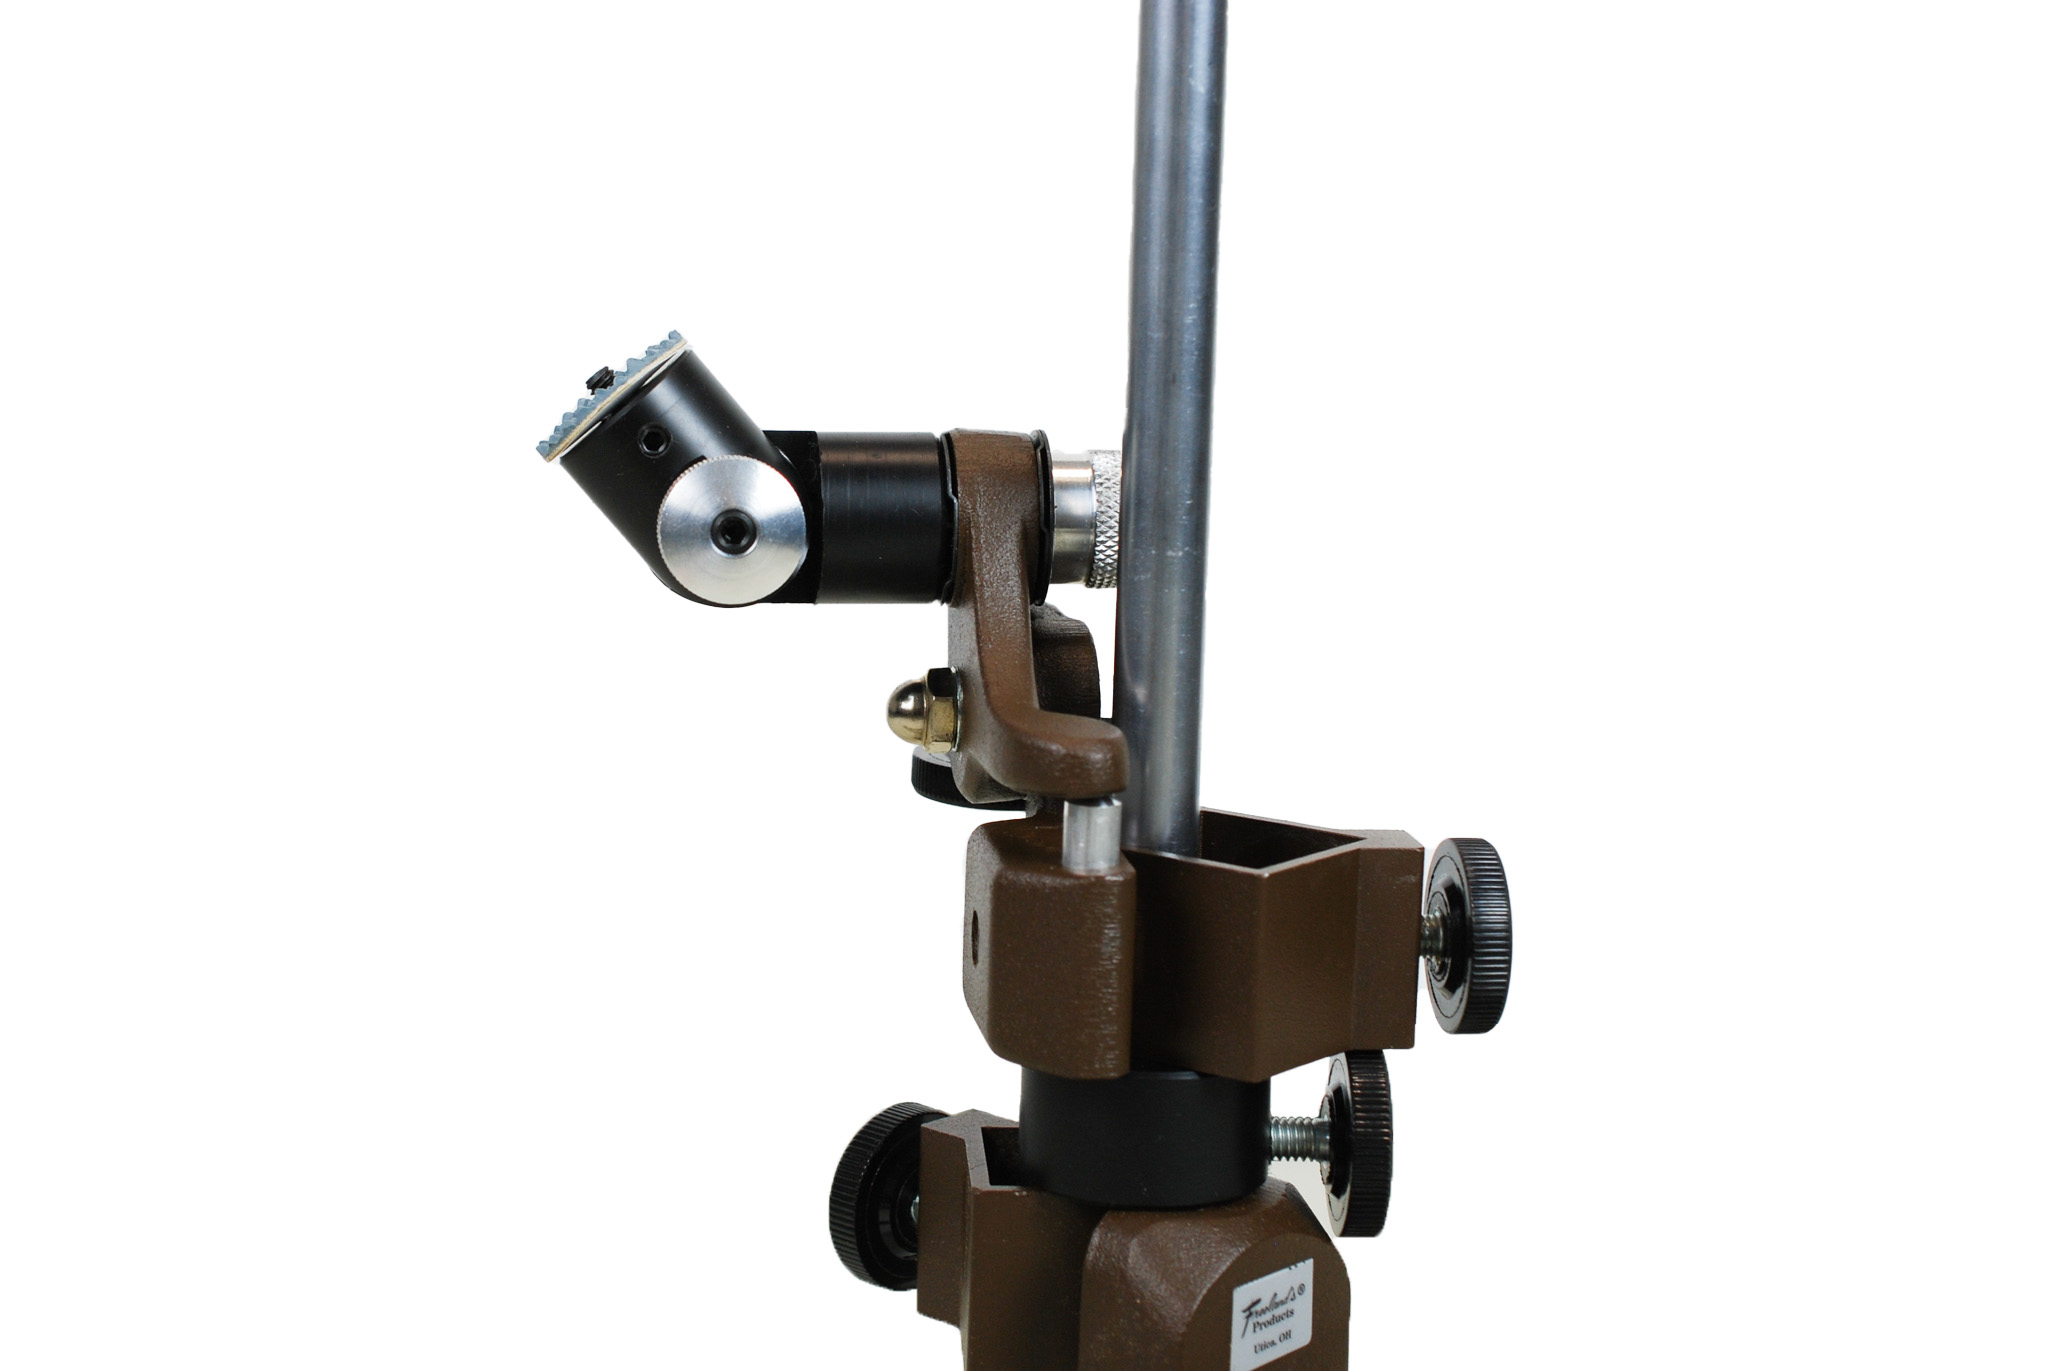 Freeland Bipod scope stand with swivel head